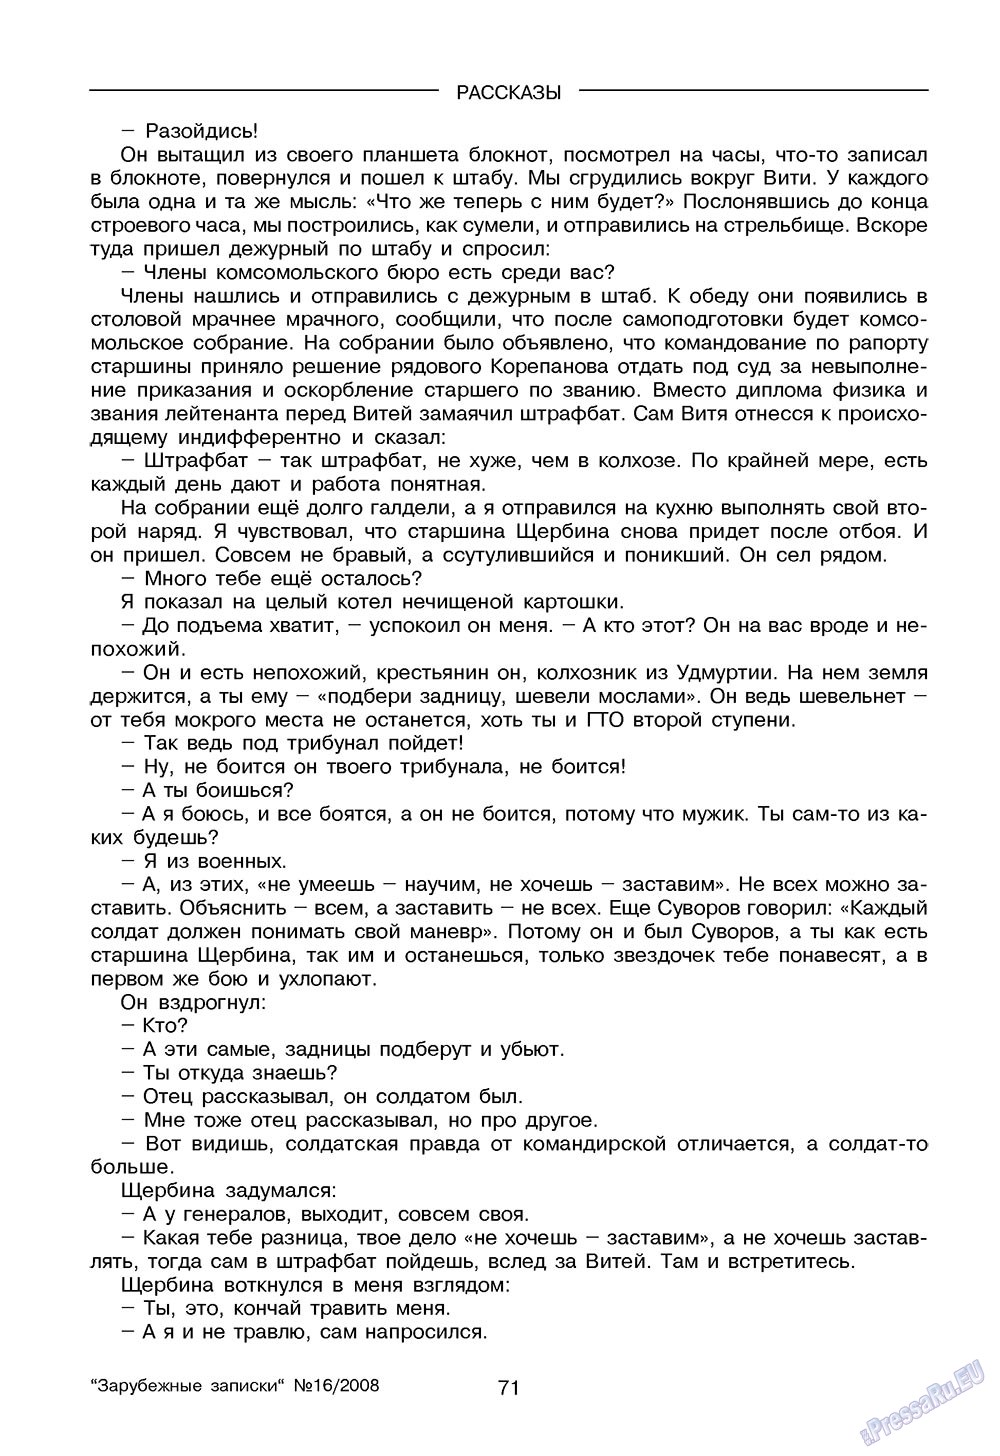 Зарубежные записки, журнал. 2008 №4 стр.73